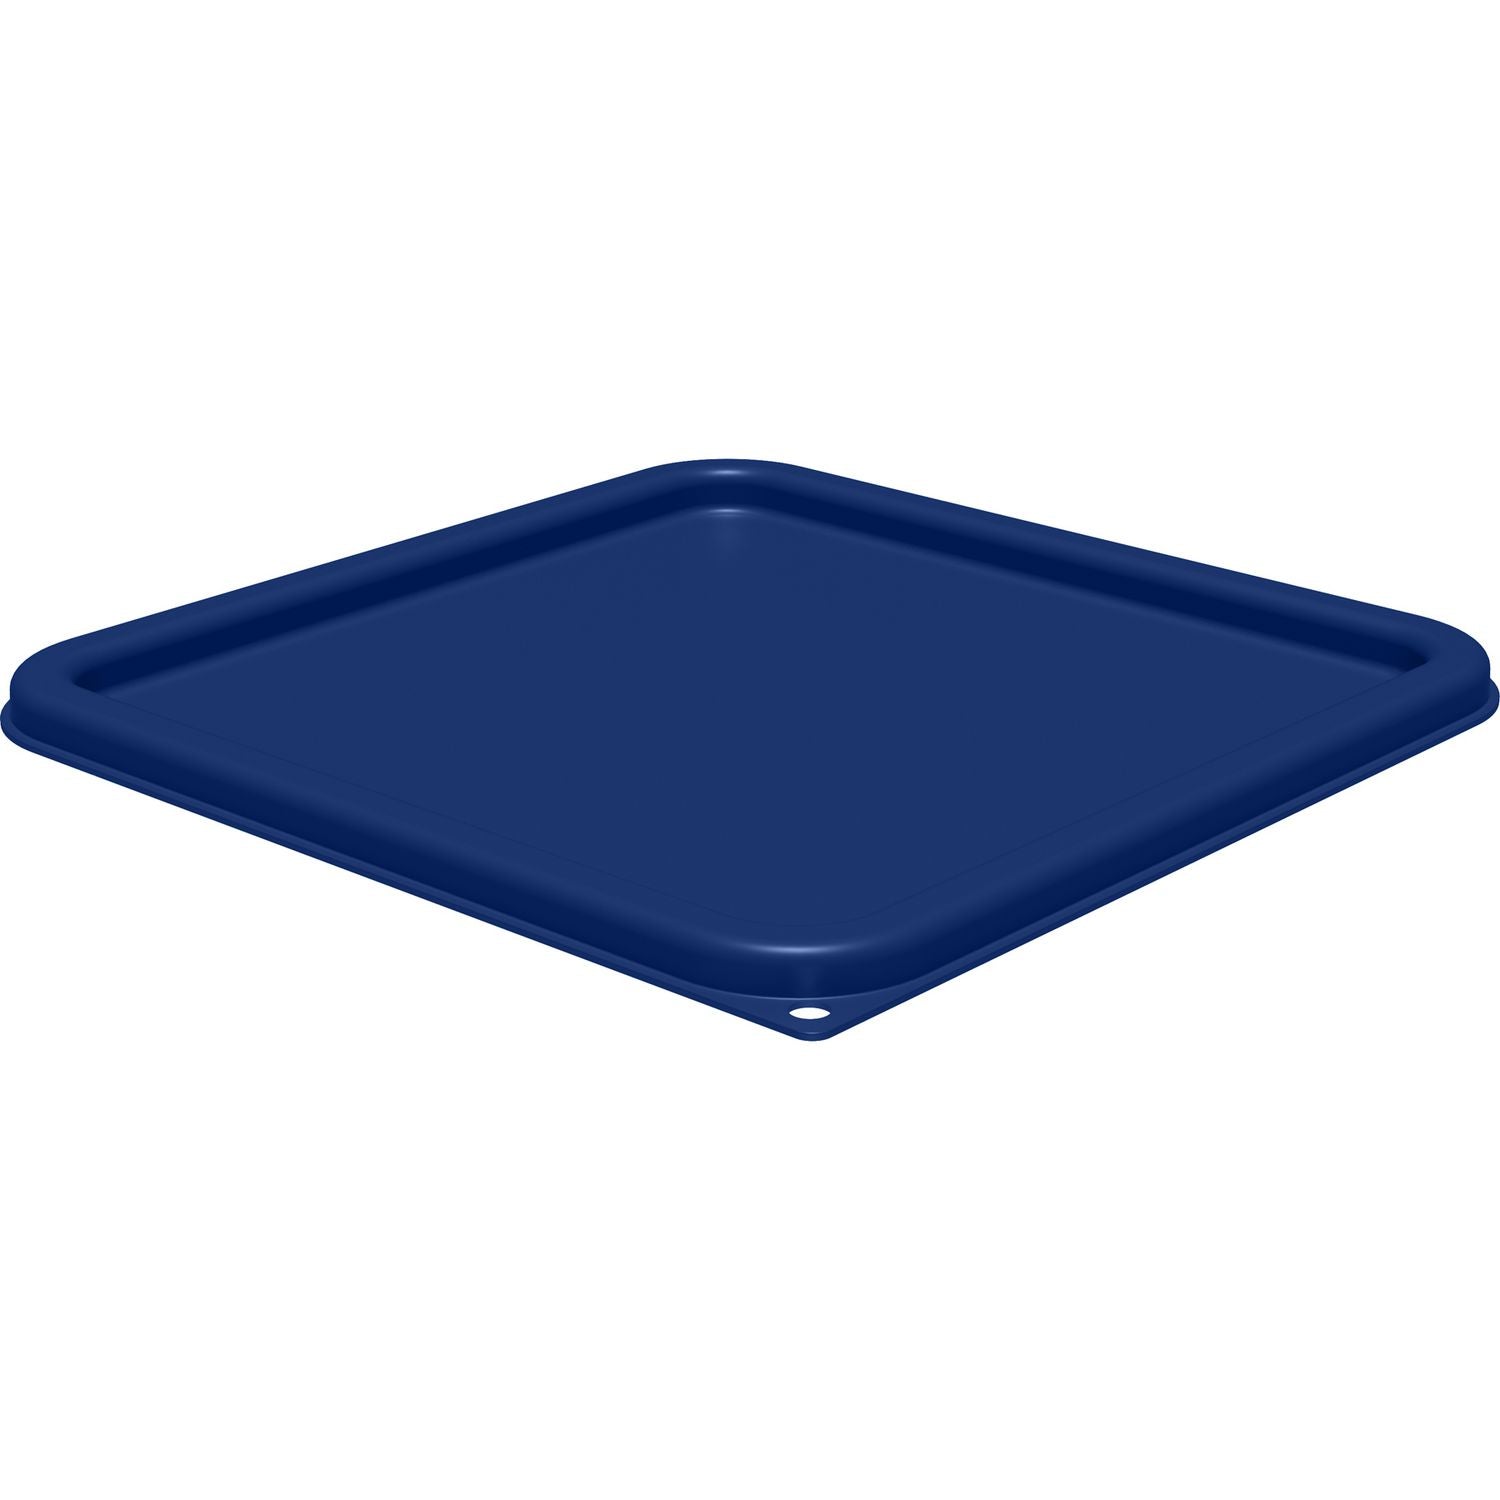 squares-food-storage-container-lid-1138-x-1138-x-063-blue-plastic_cfs1197260 - 1